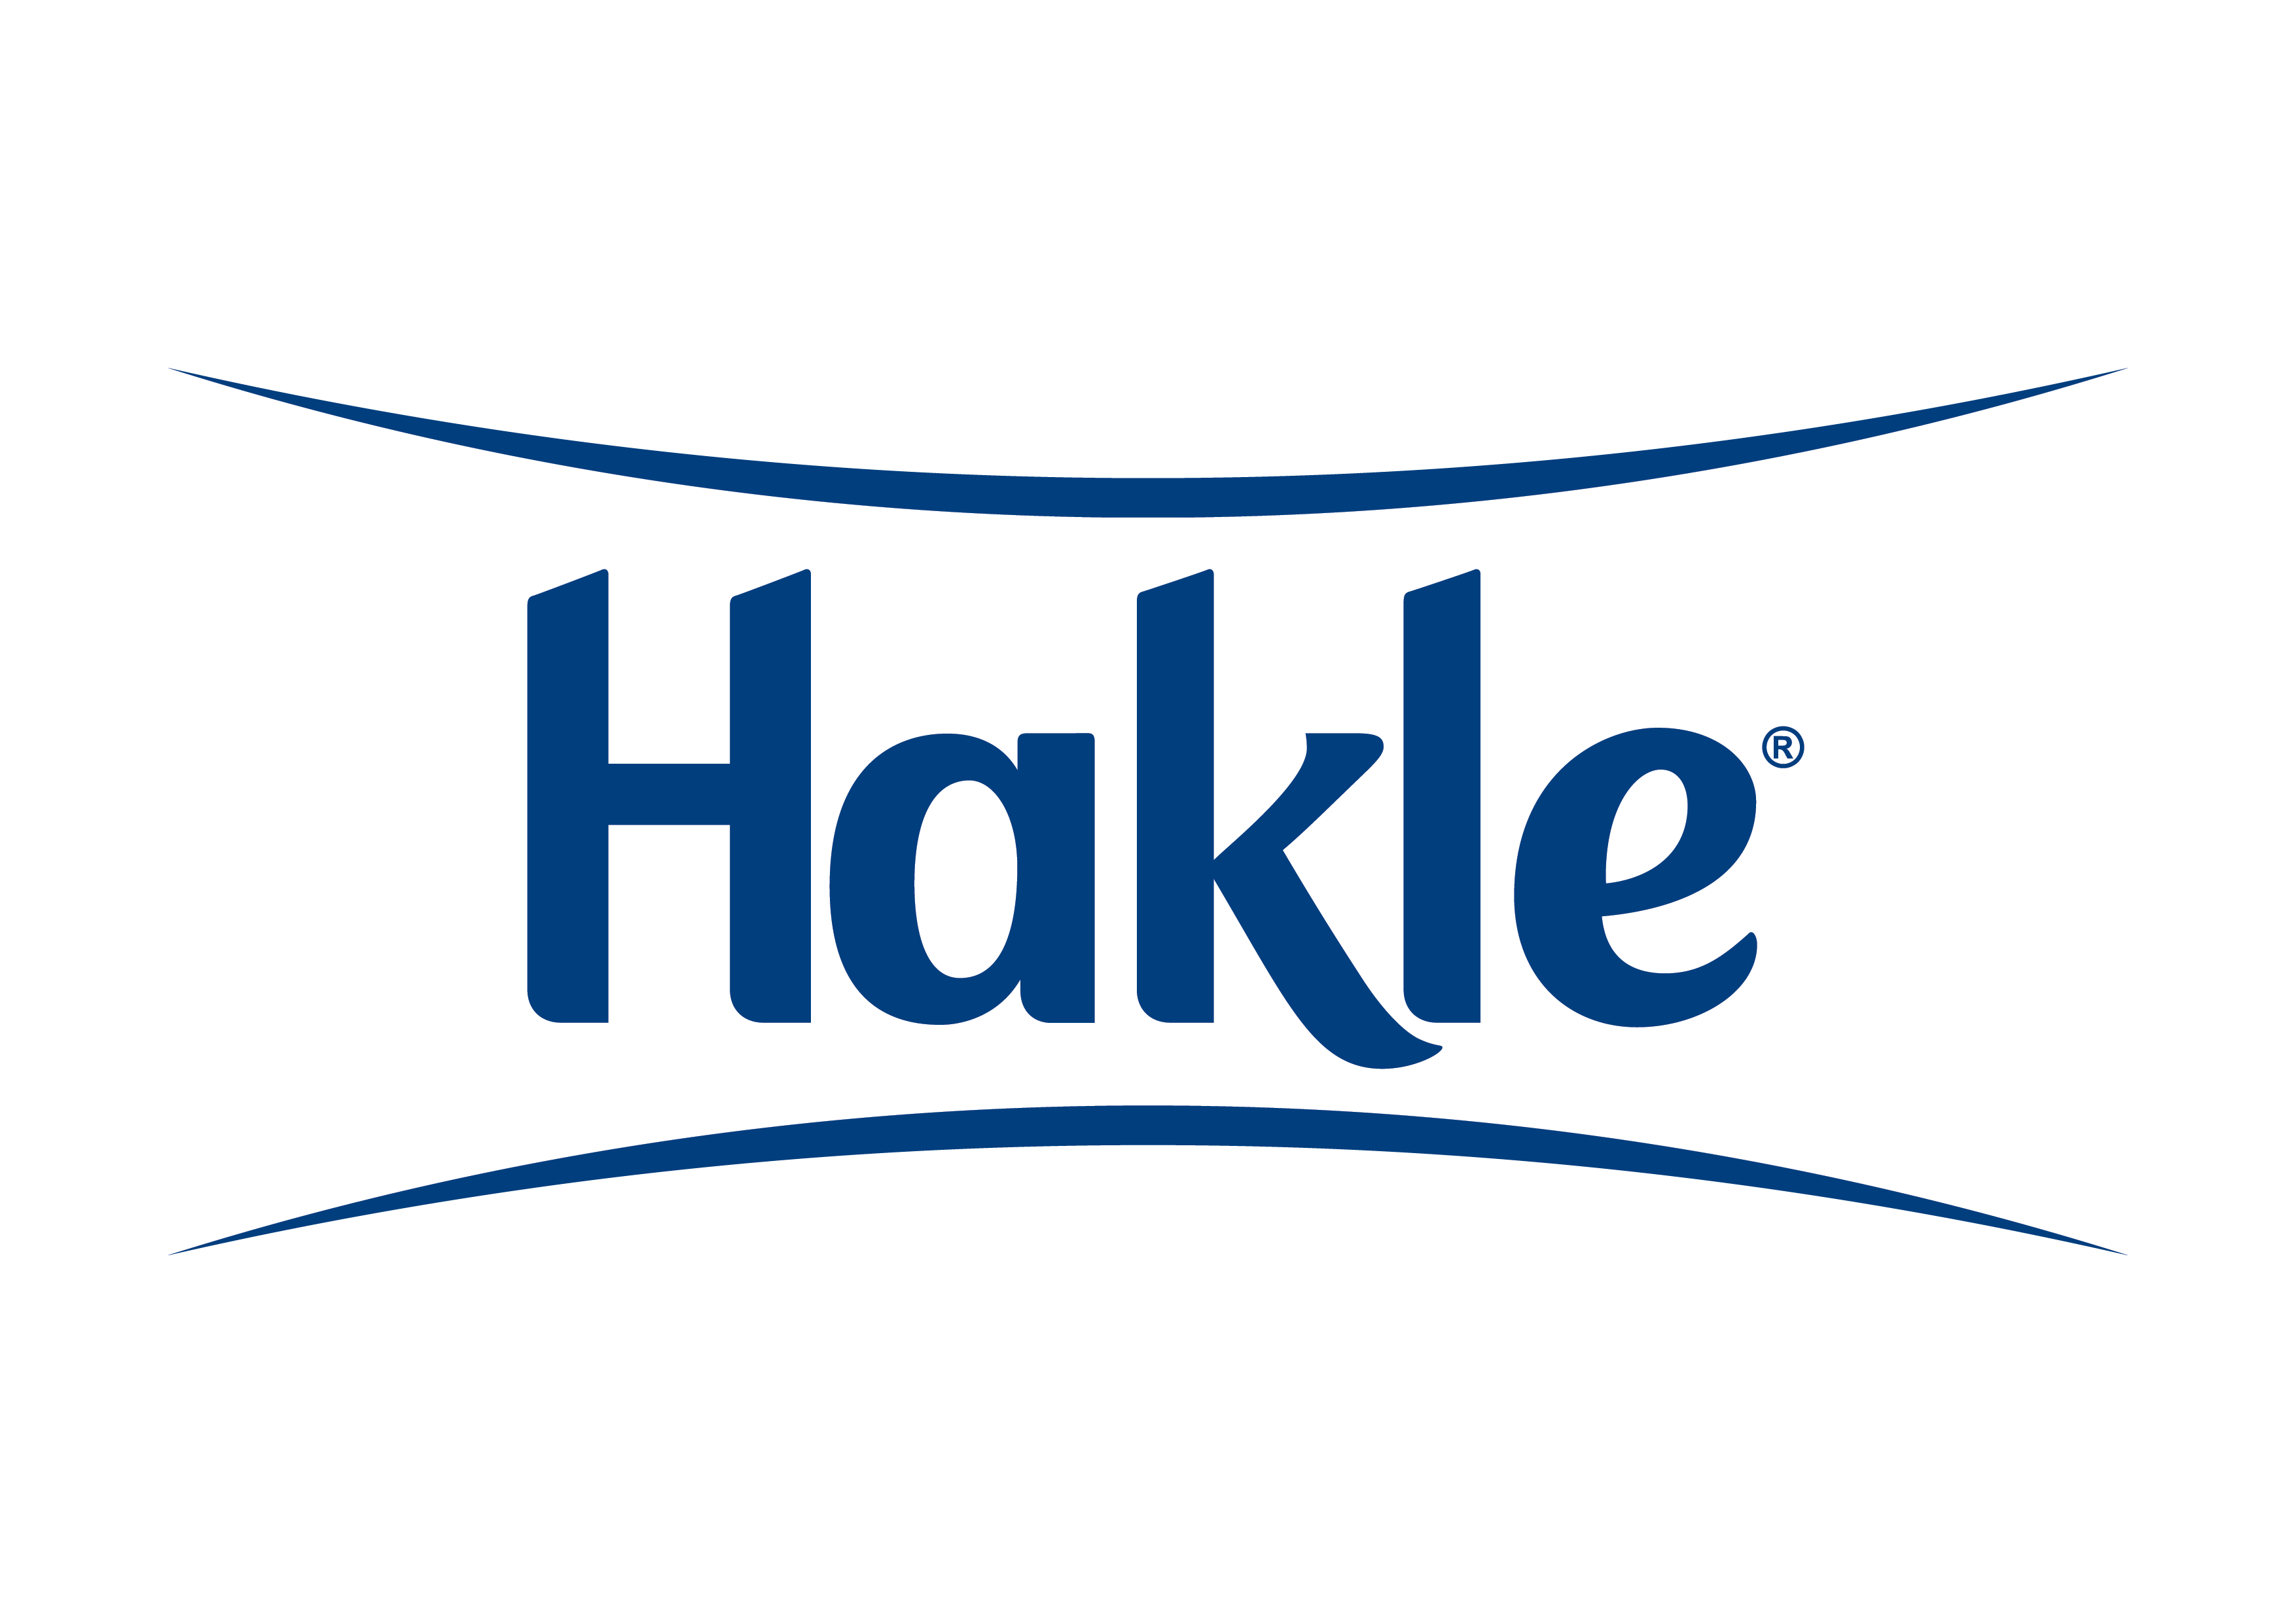 Hakle Logo